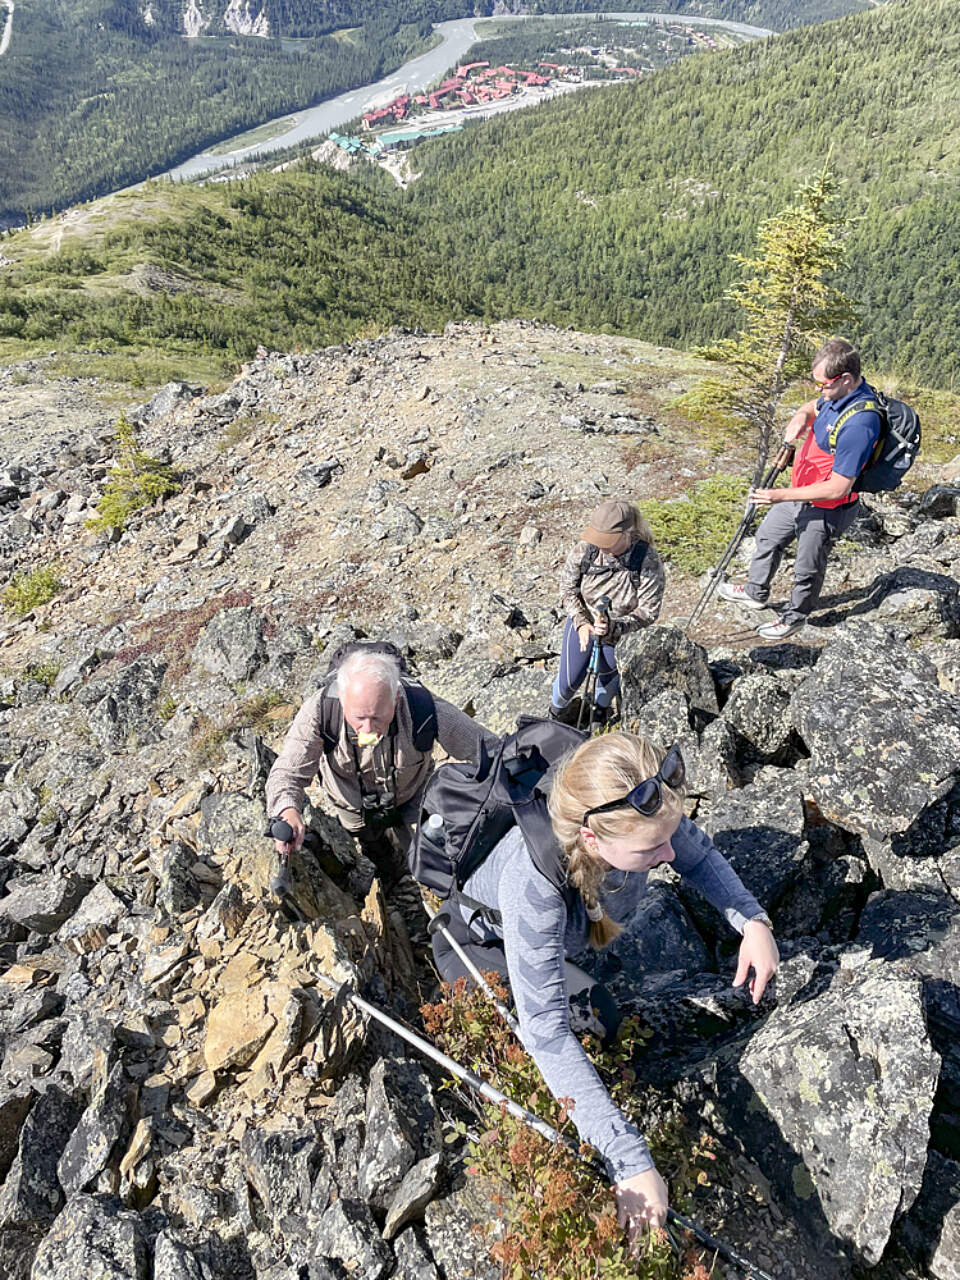 Guests climb a mountain near the Denali National Park entrance